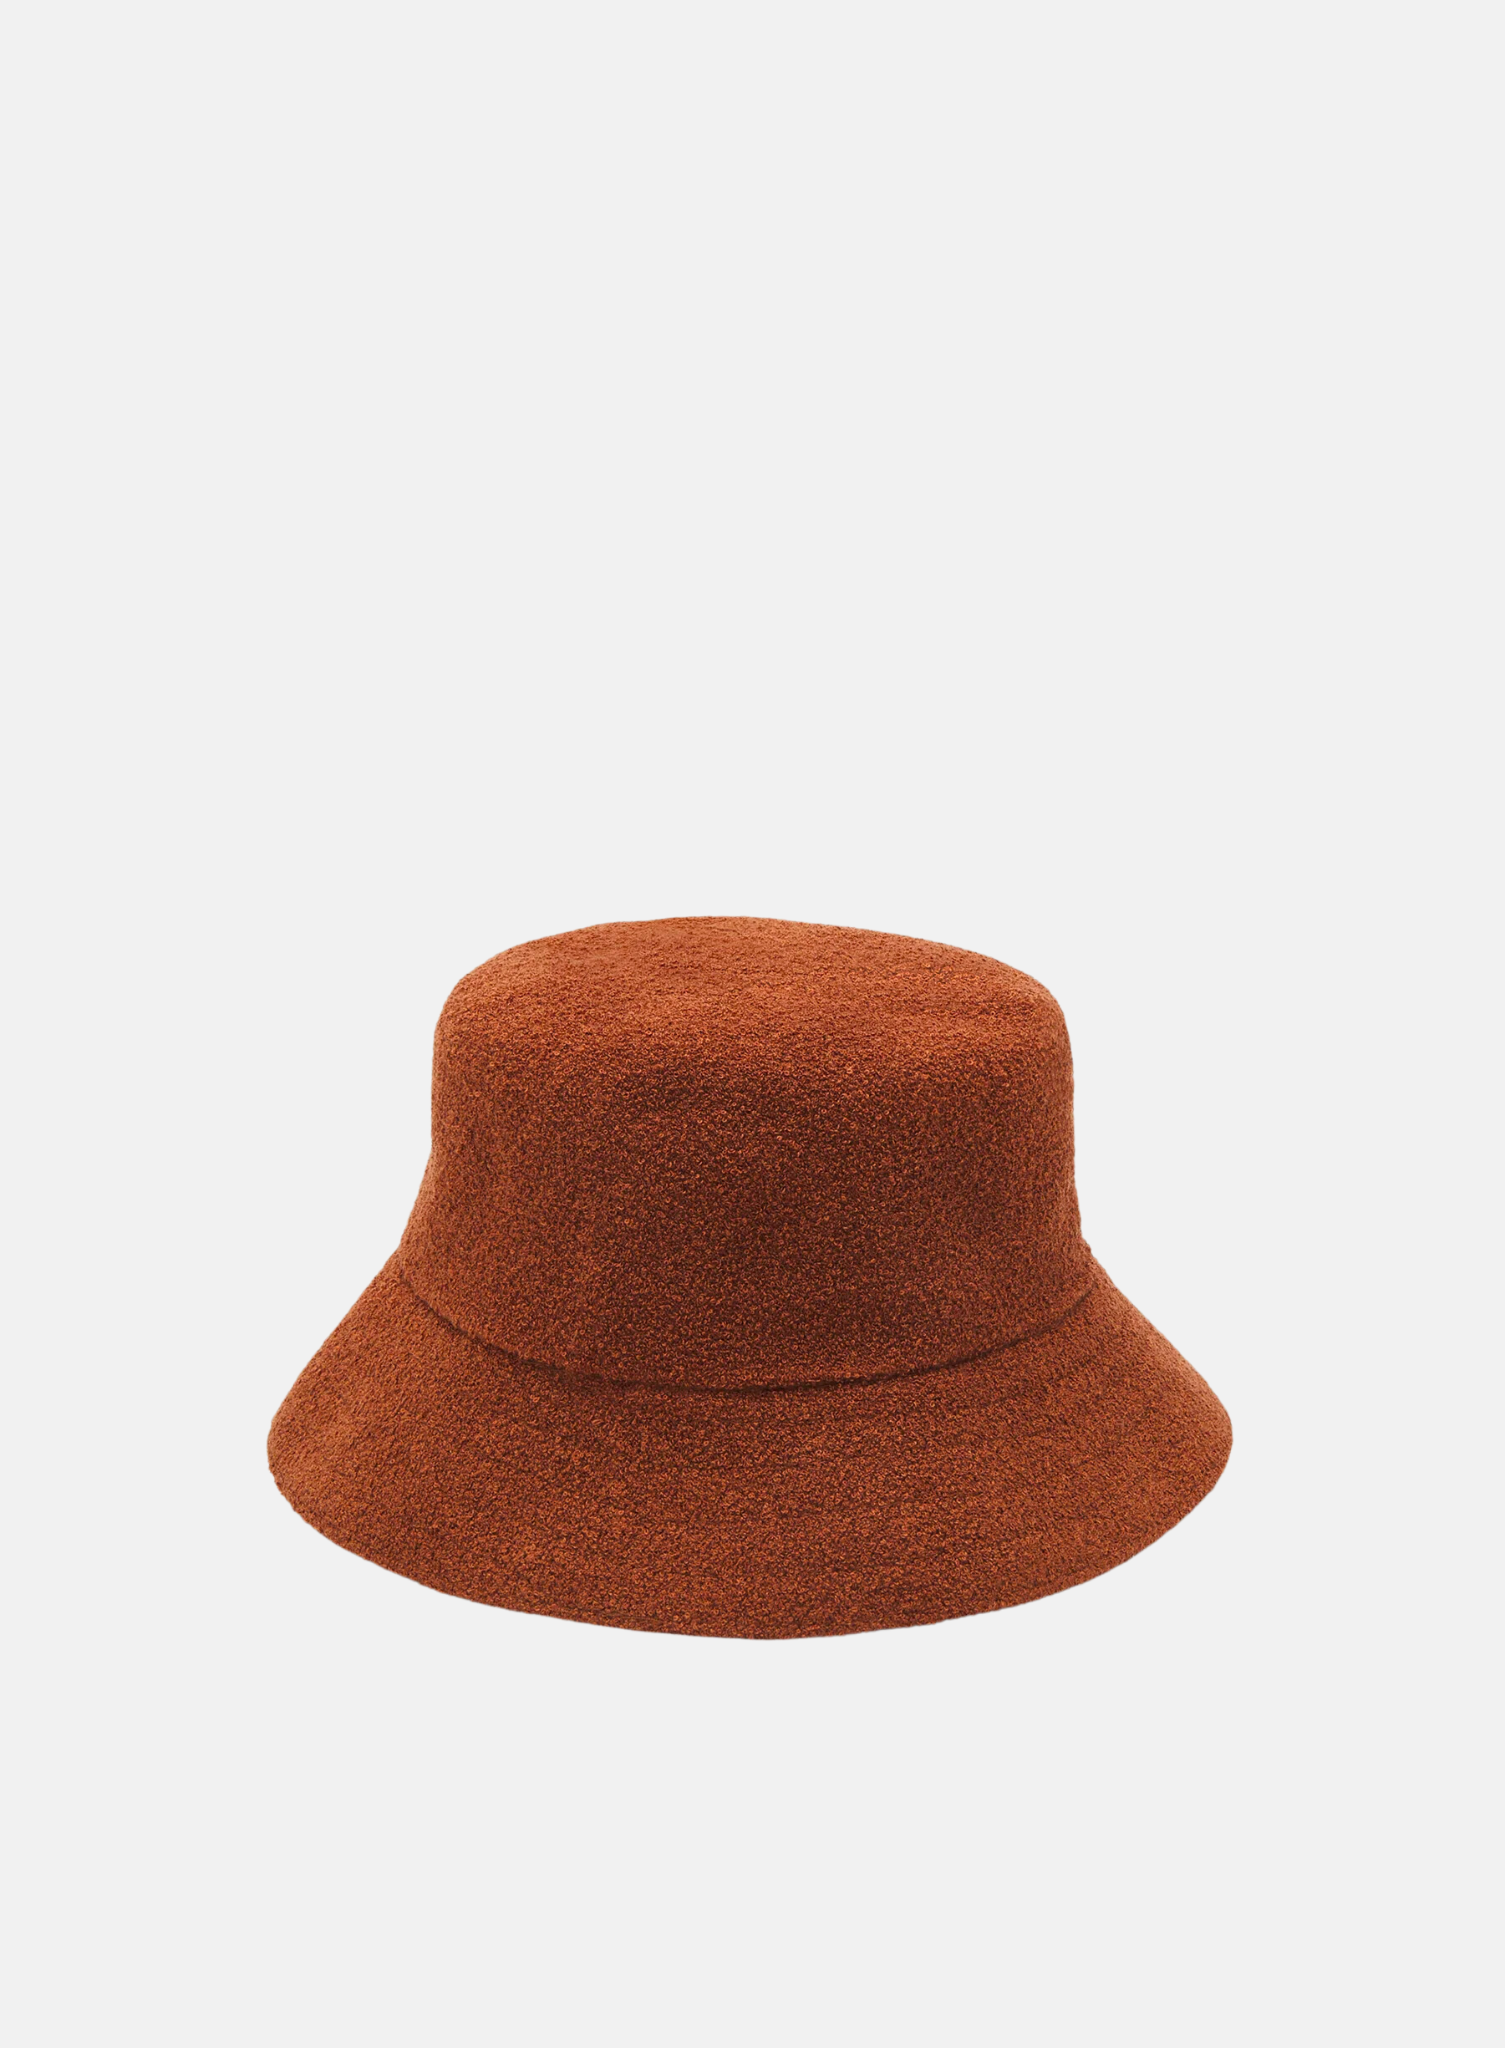 Bermuda Bucket Hat Brown